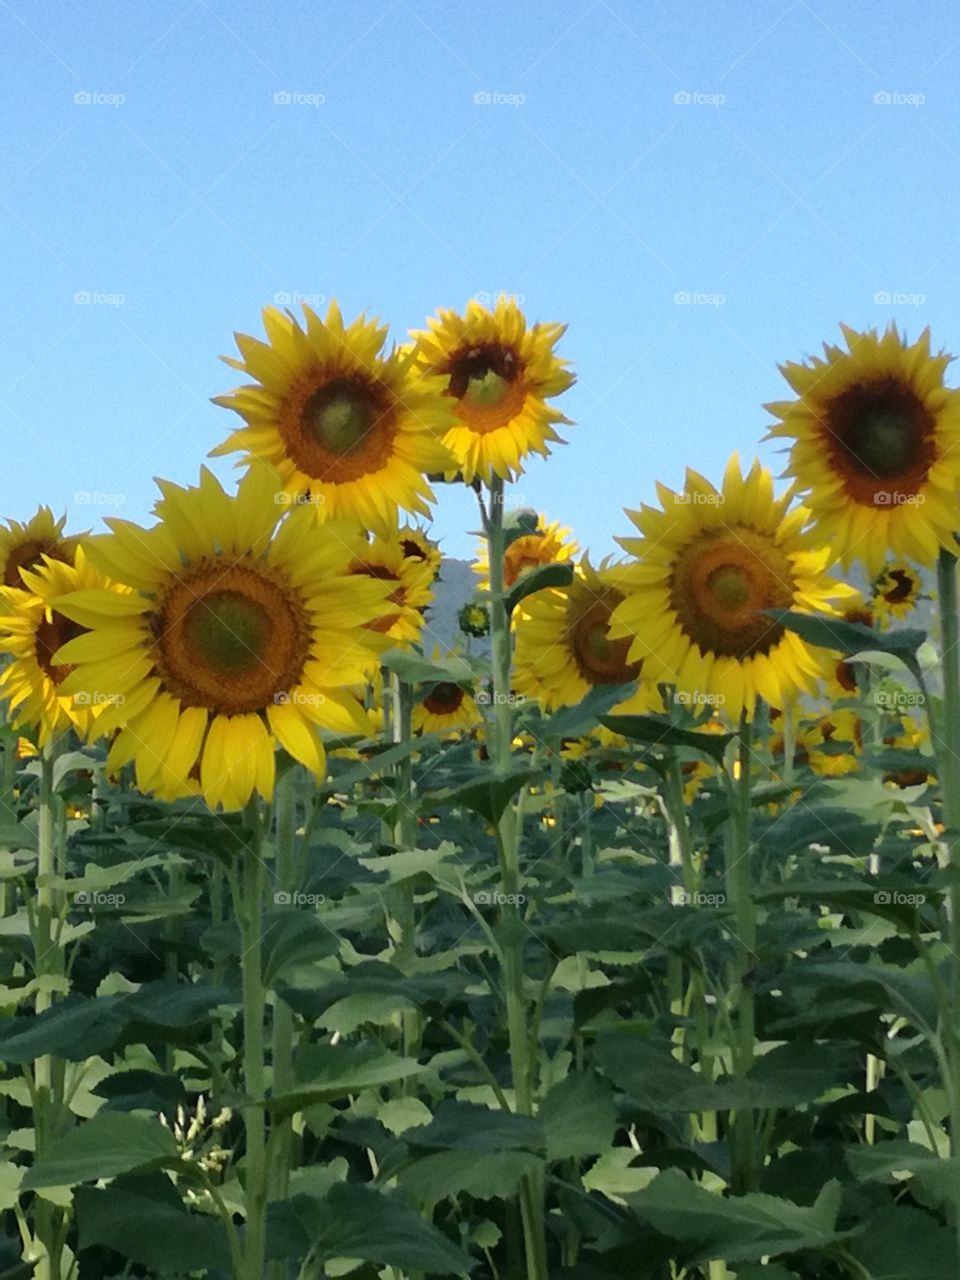 Sunflowers watching the sun